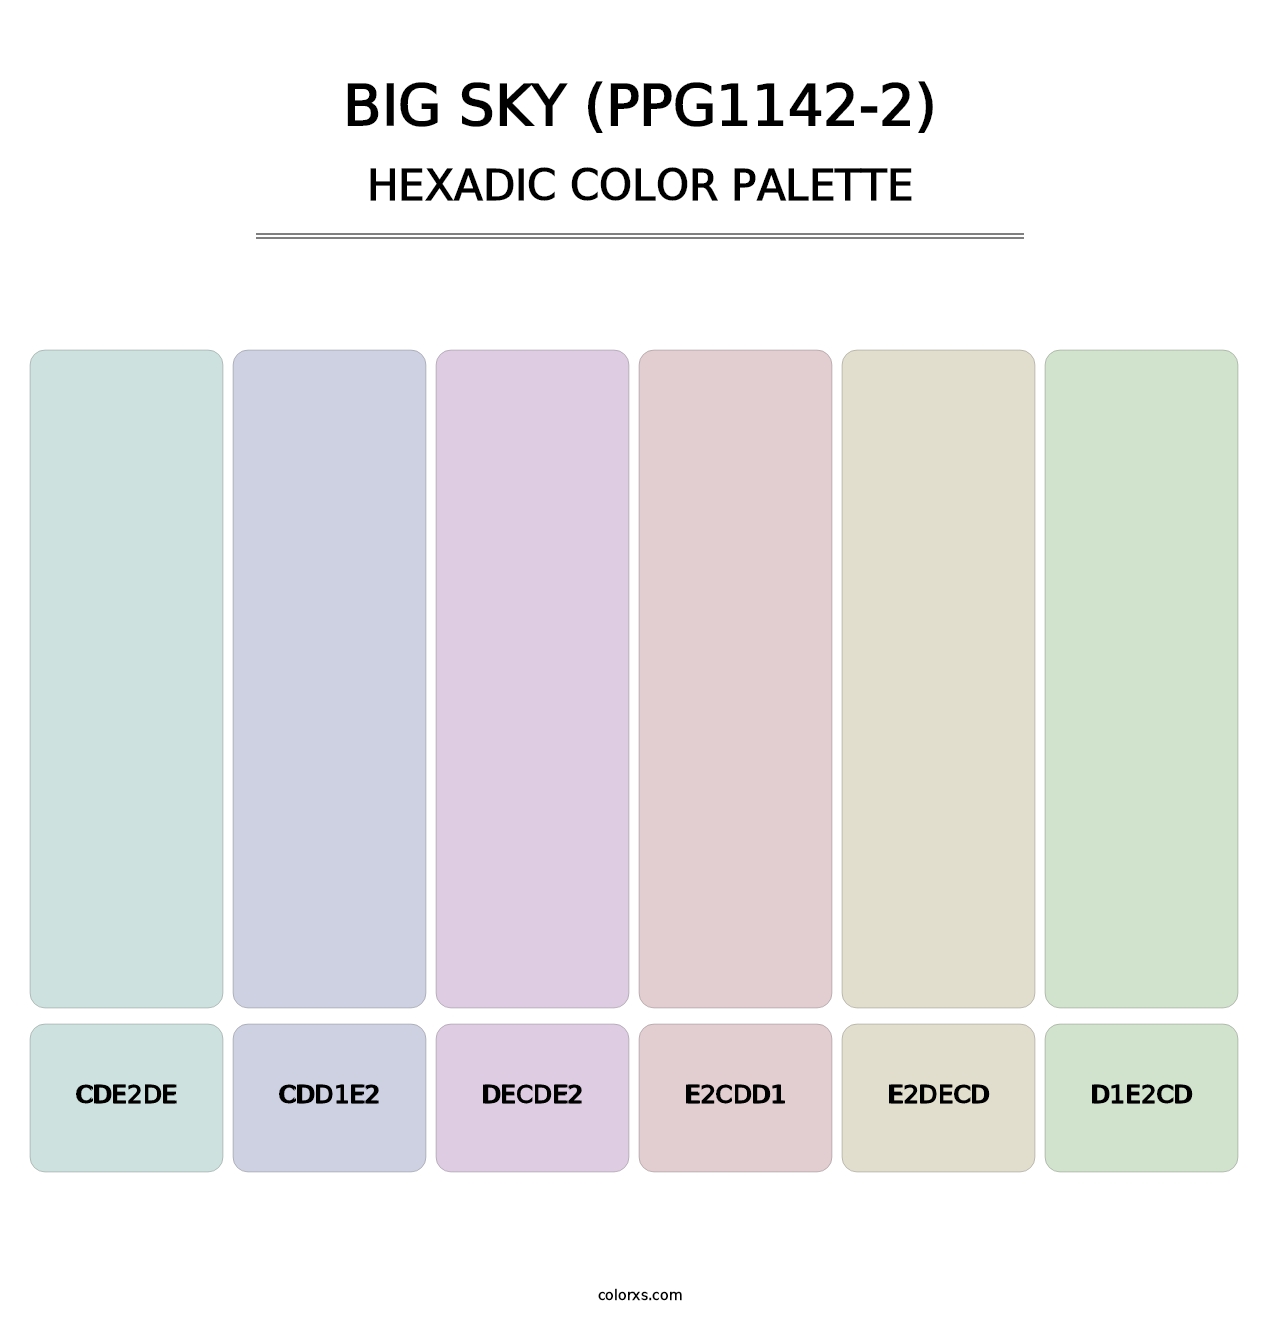 Big Sky (PPG1142-2) - Hexadic Color Palette